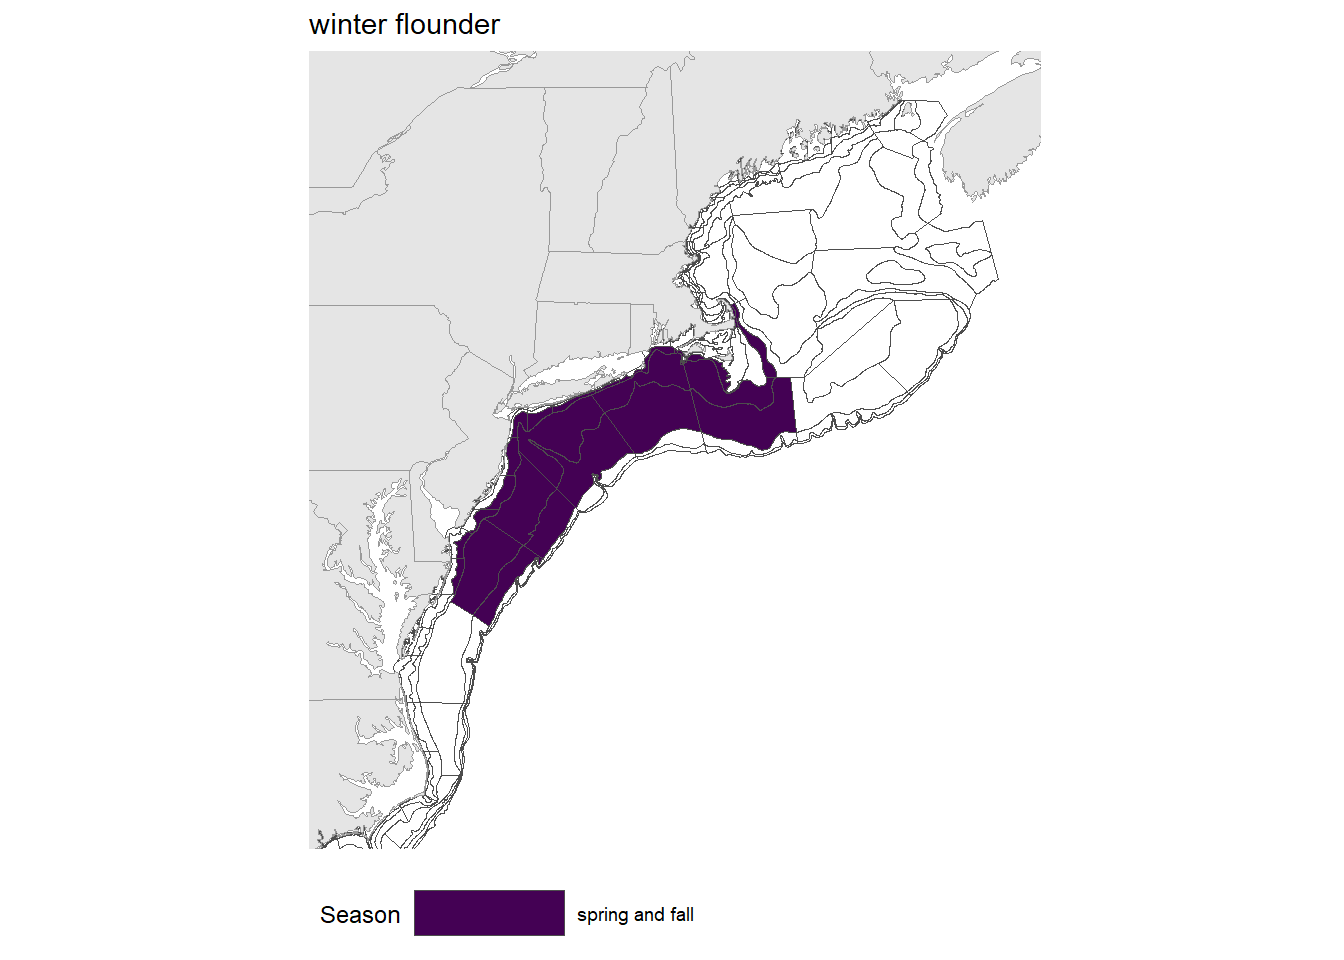 Strata map for the winter flounder (Pseudopleuronectes americanus) stock on the NE shelf.